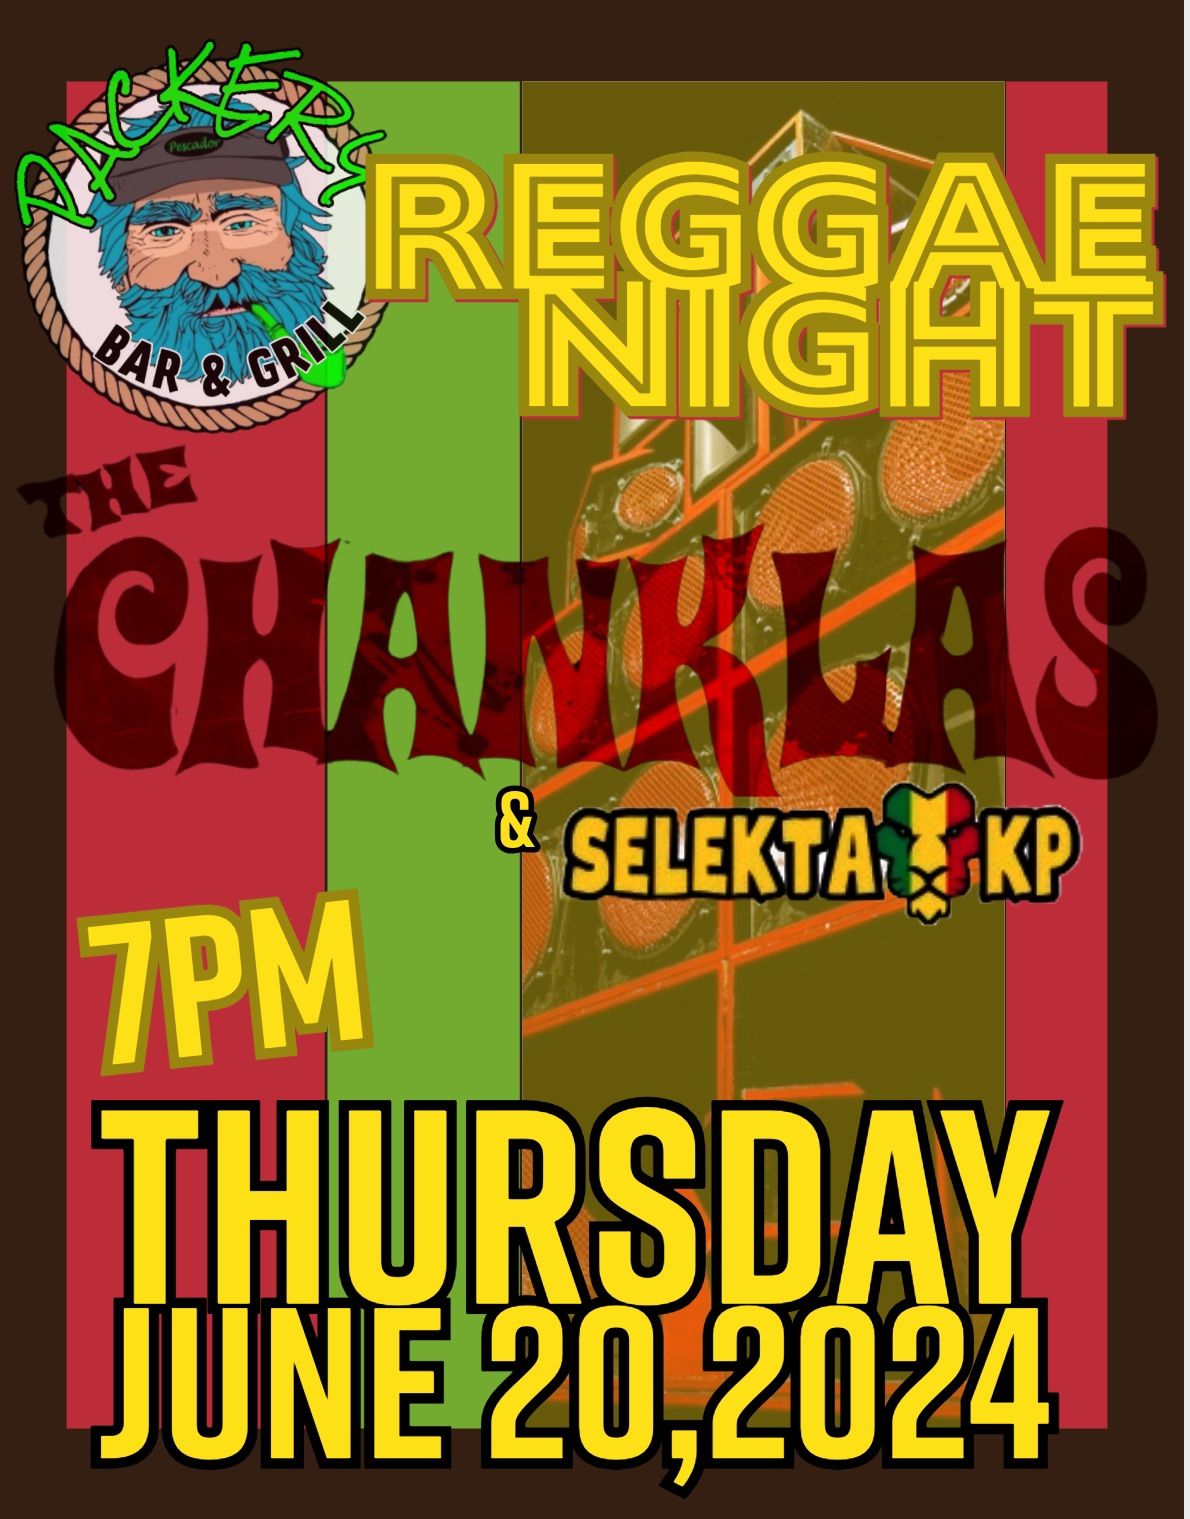 Reggae Night w\/ The CHANKLAS & Selekta KP